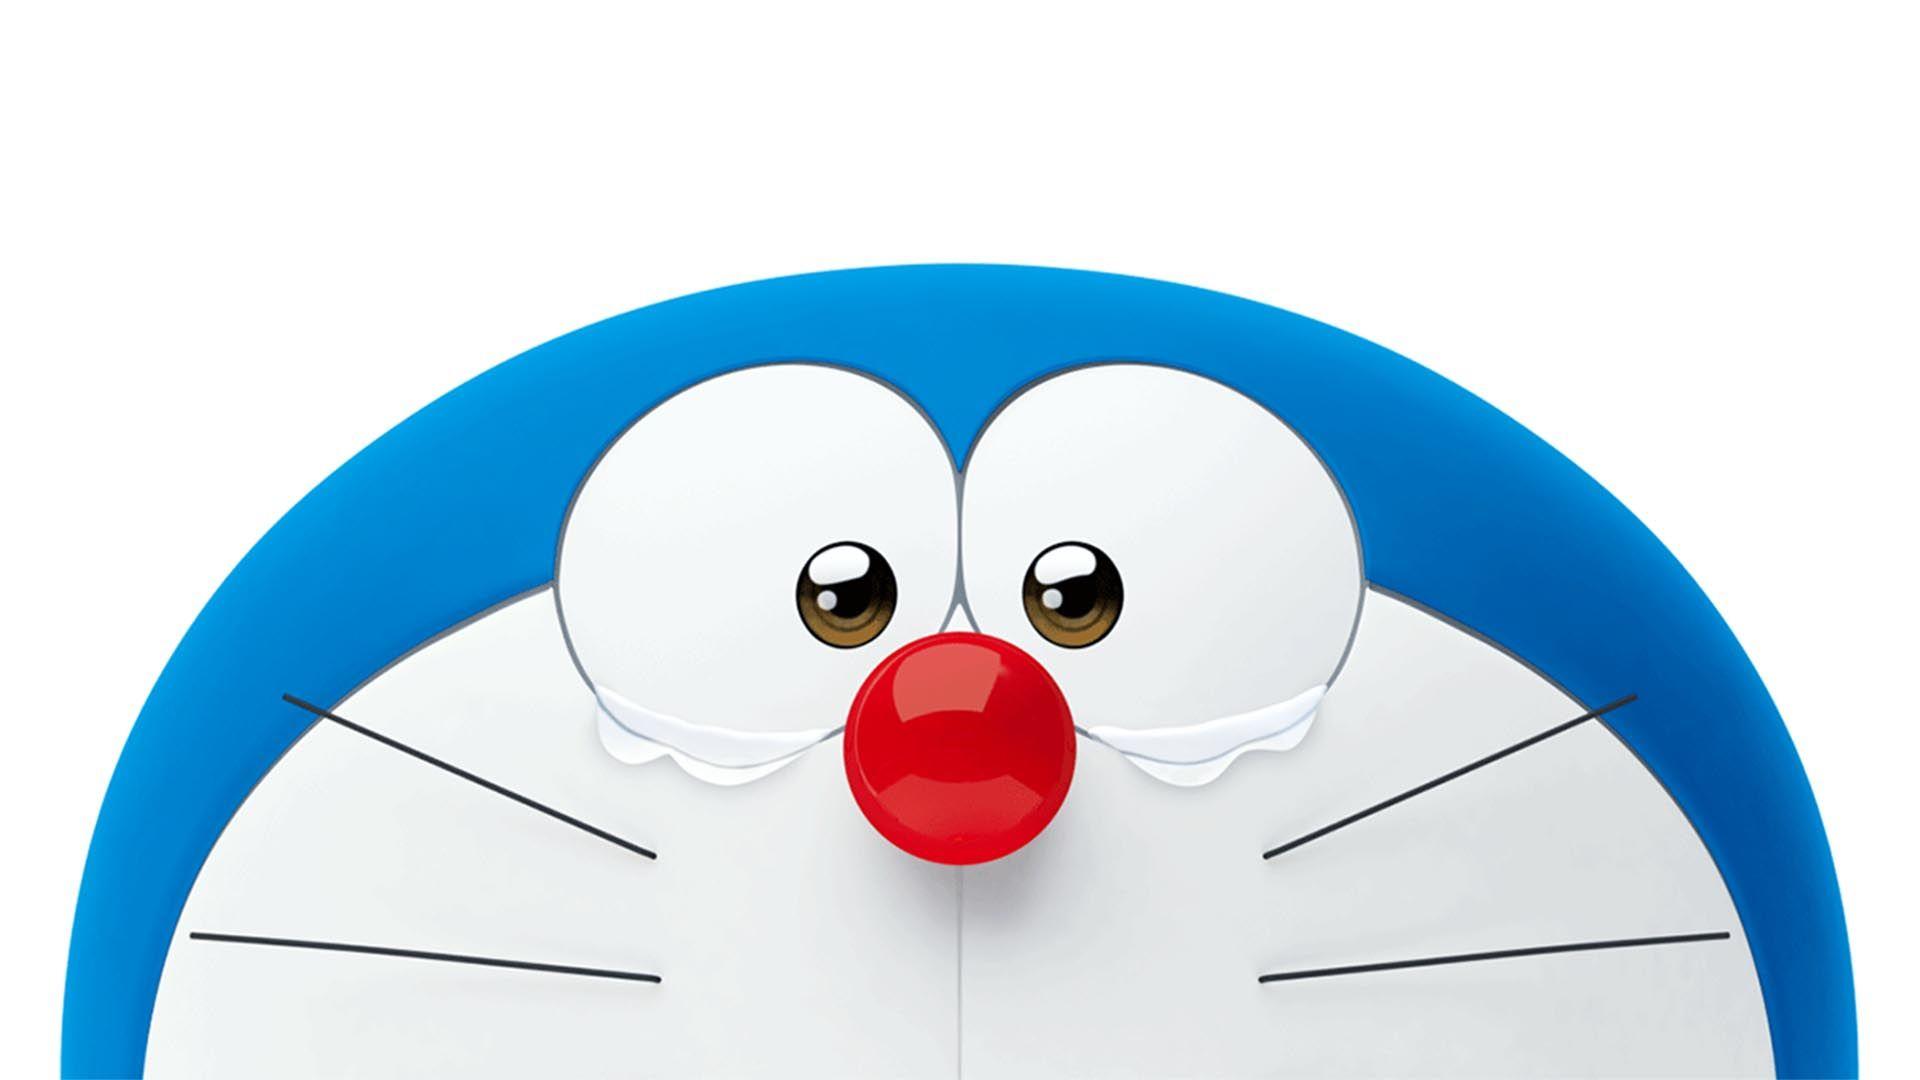 Quality Image of Doraemon › 1920x1080 px for PC & Mac, Laptop